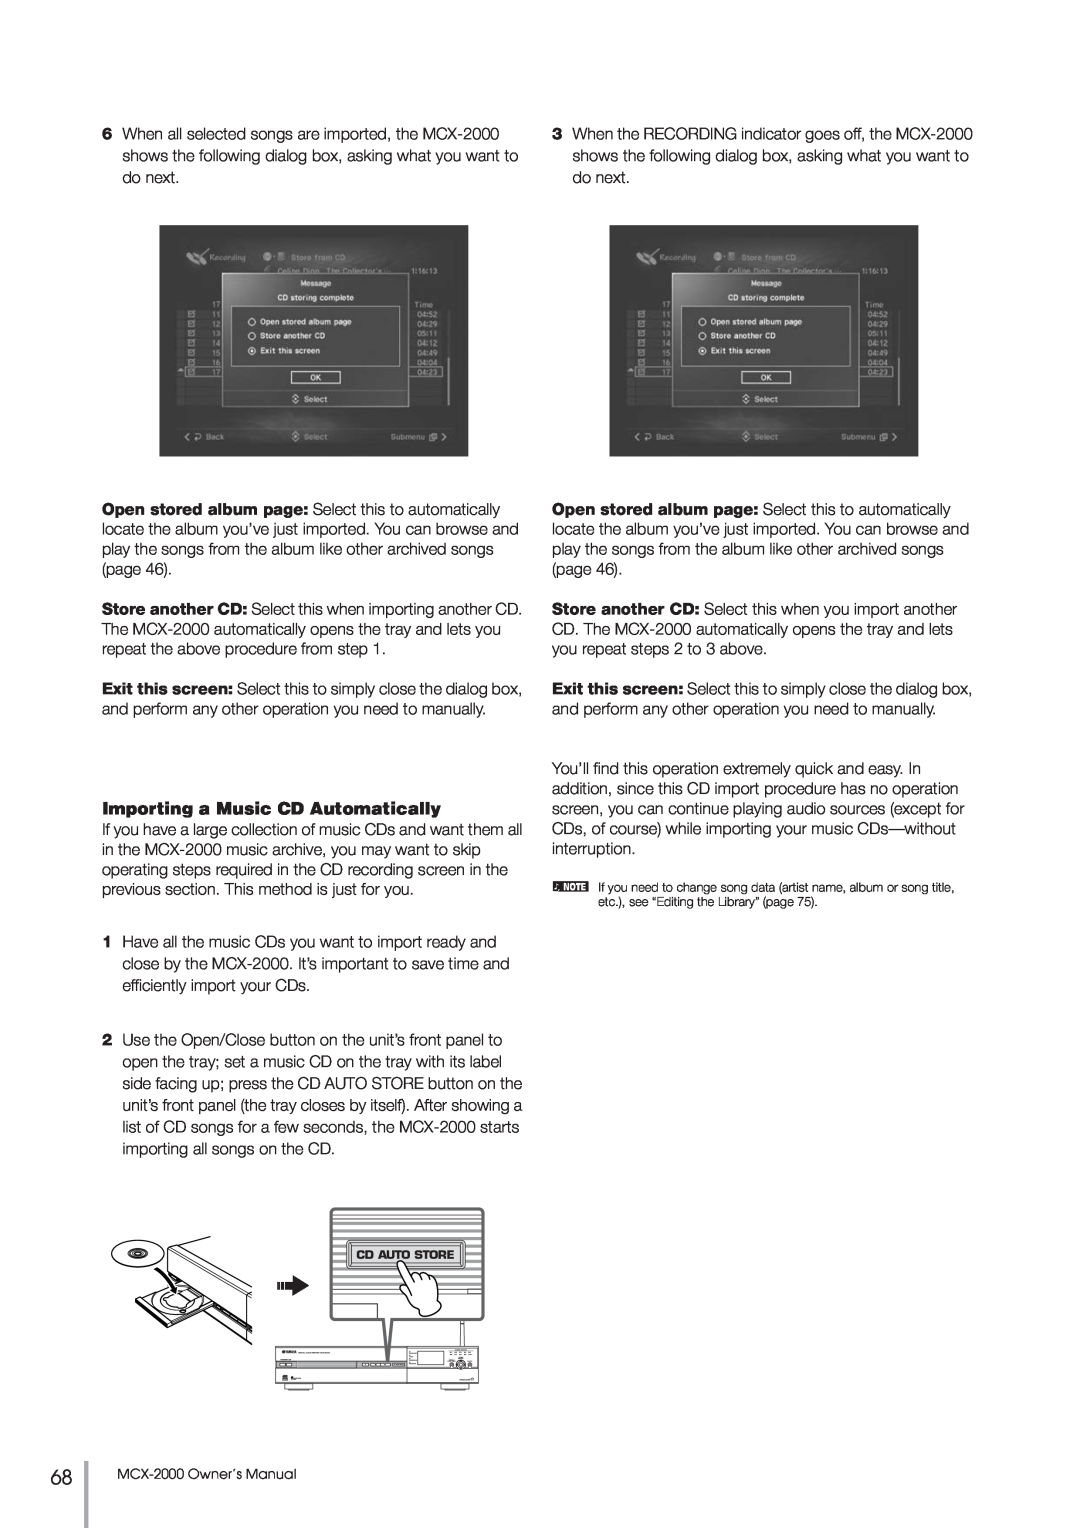 Yamaha MCX-2000 setup guide Importing a Music CD Automatically, Cd Auto Store 